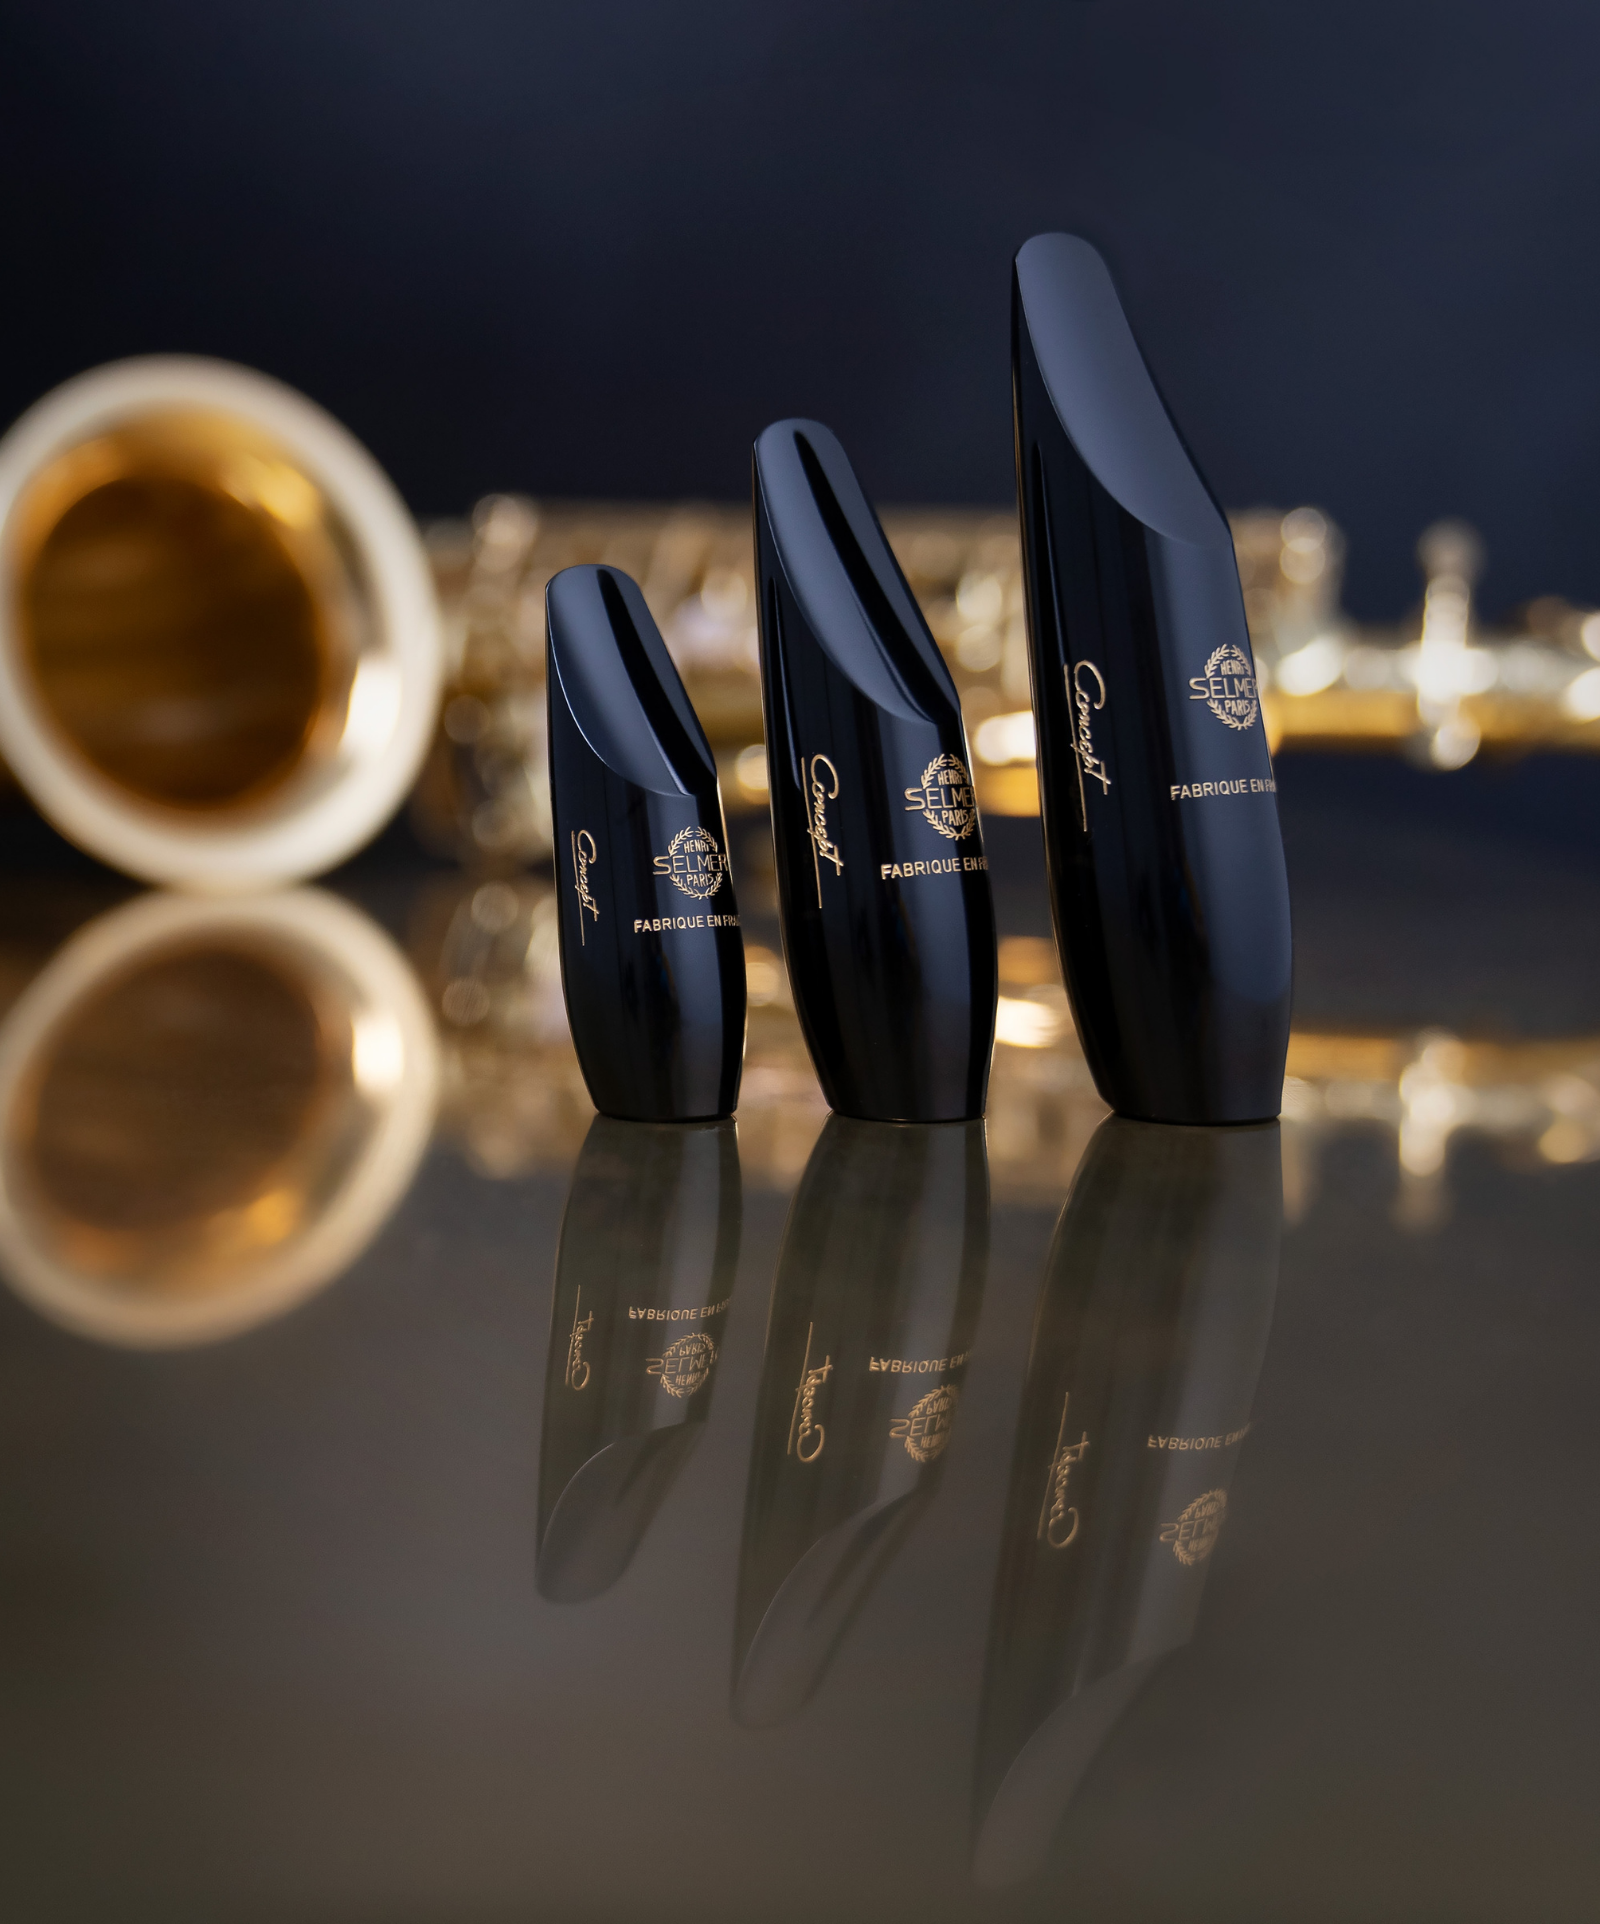 Concept mouthpiece for alto saxophone